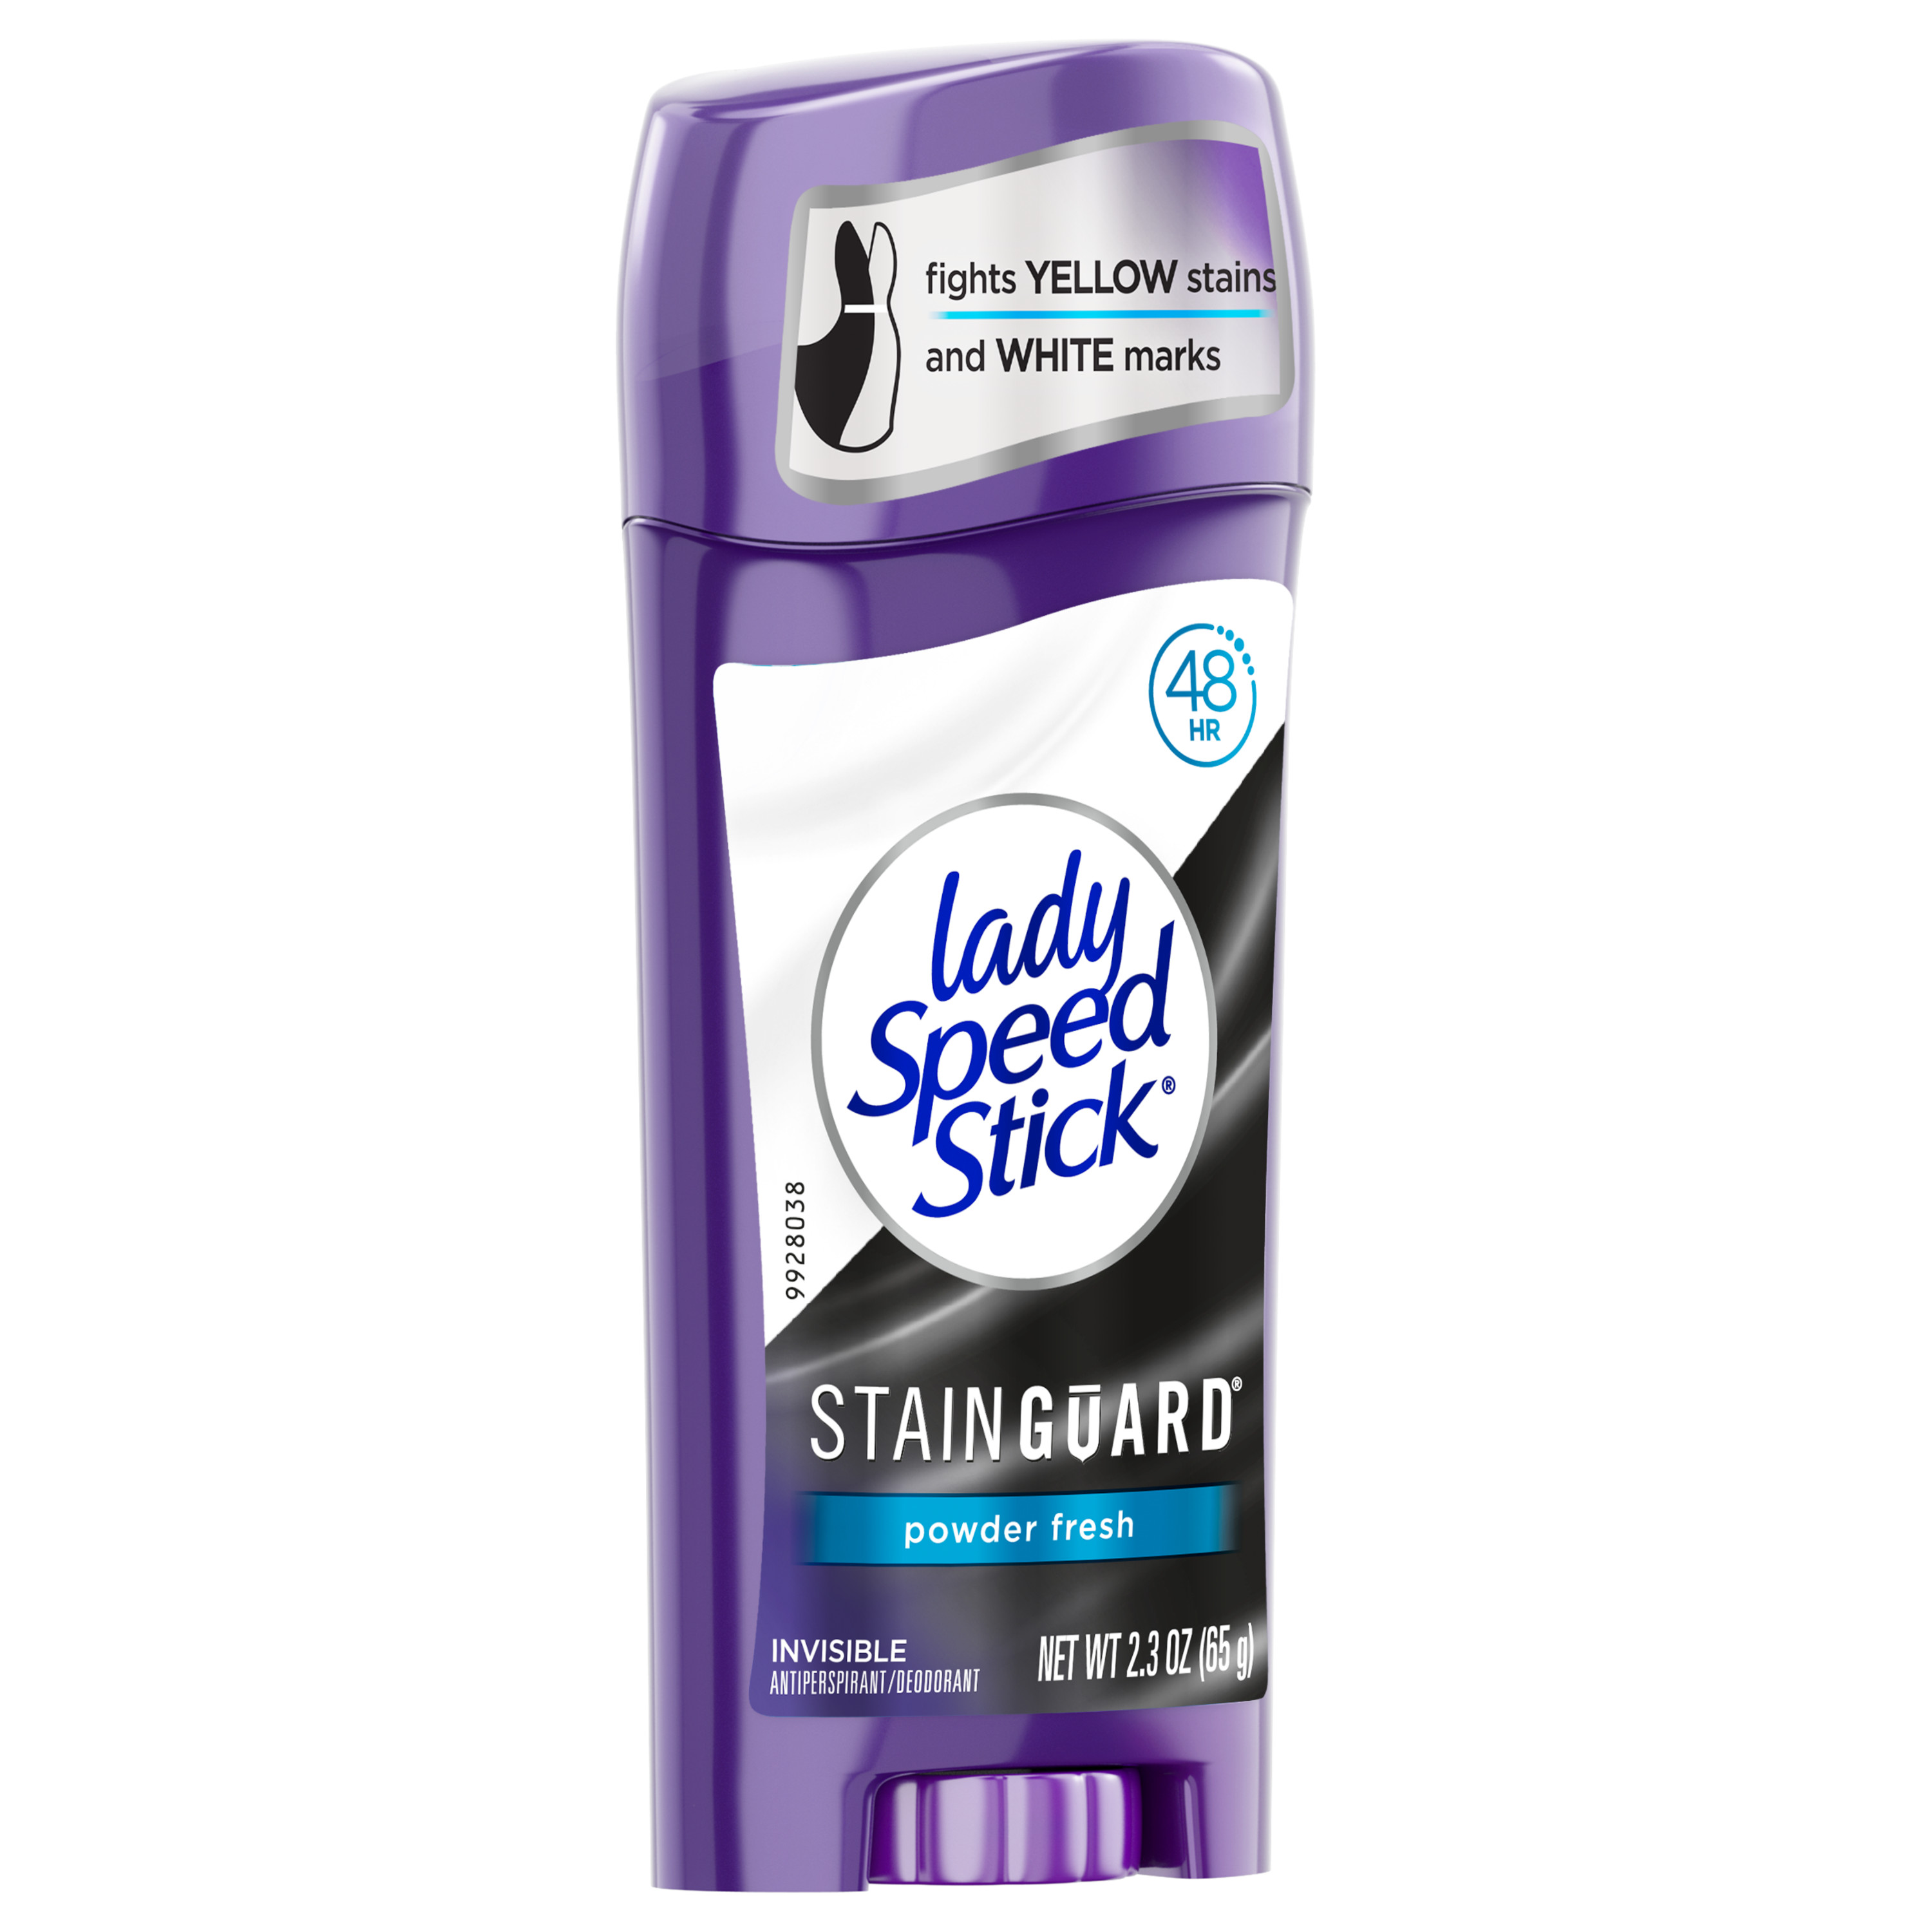 Lady Speed Stick Stainguard Antiperspirant Female Deodorant, Powder Fresh, 2.3 oz - image 3 of 3